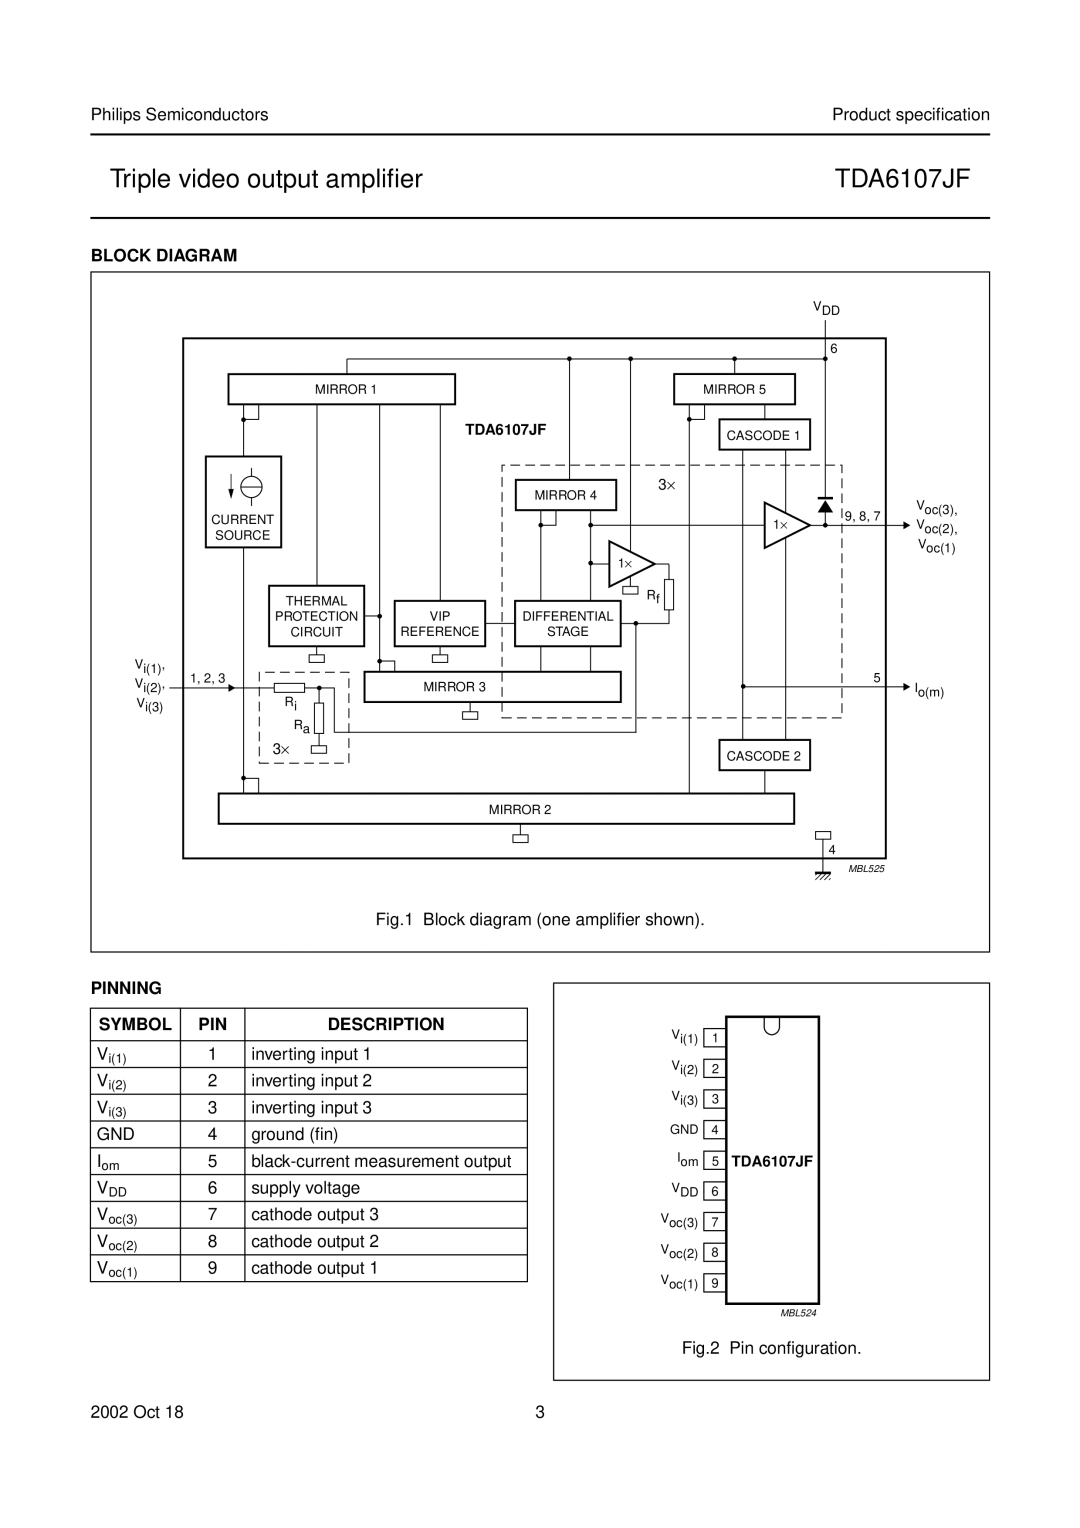 Philips TDA6107JF manual Triple video output ampliﬁer, Block Diagram, Pinning, Symbol, Description 